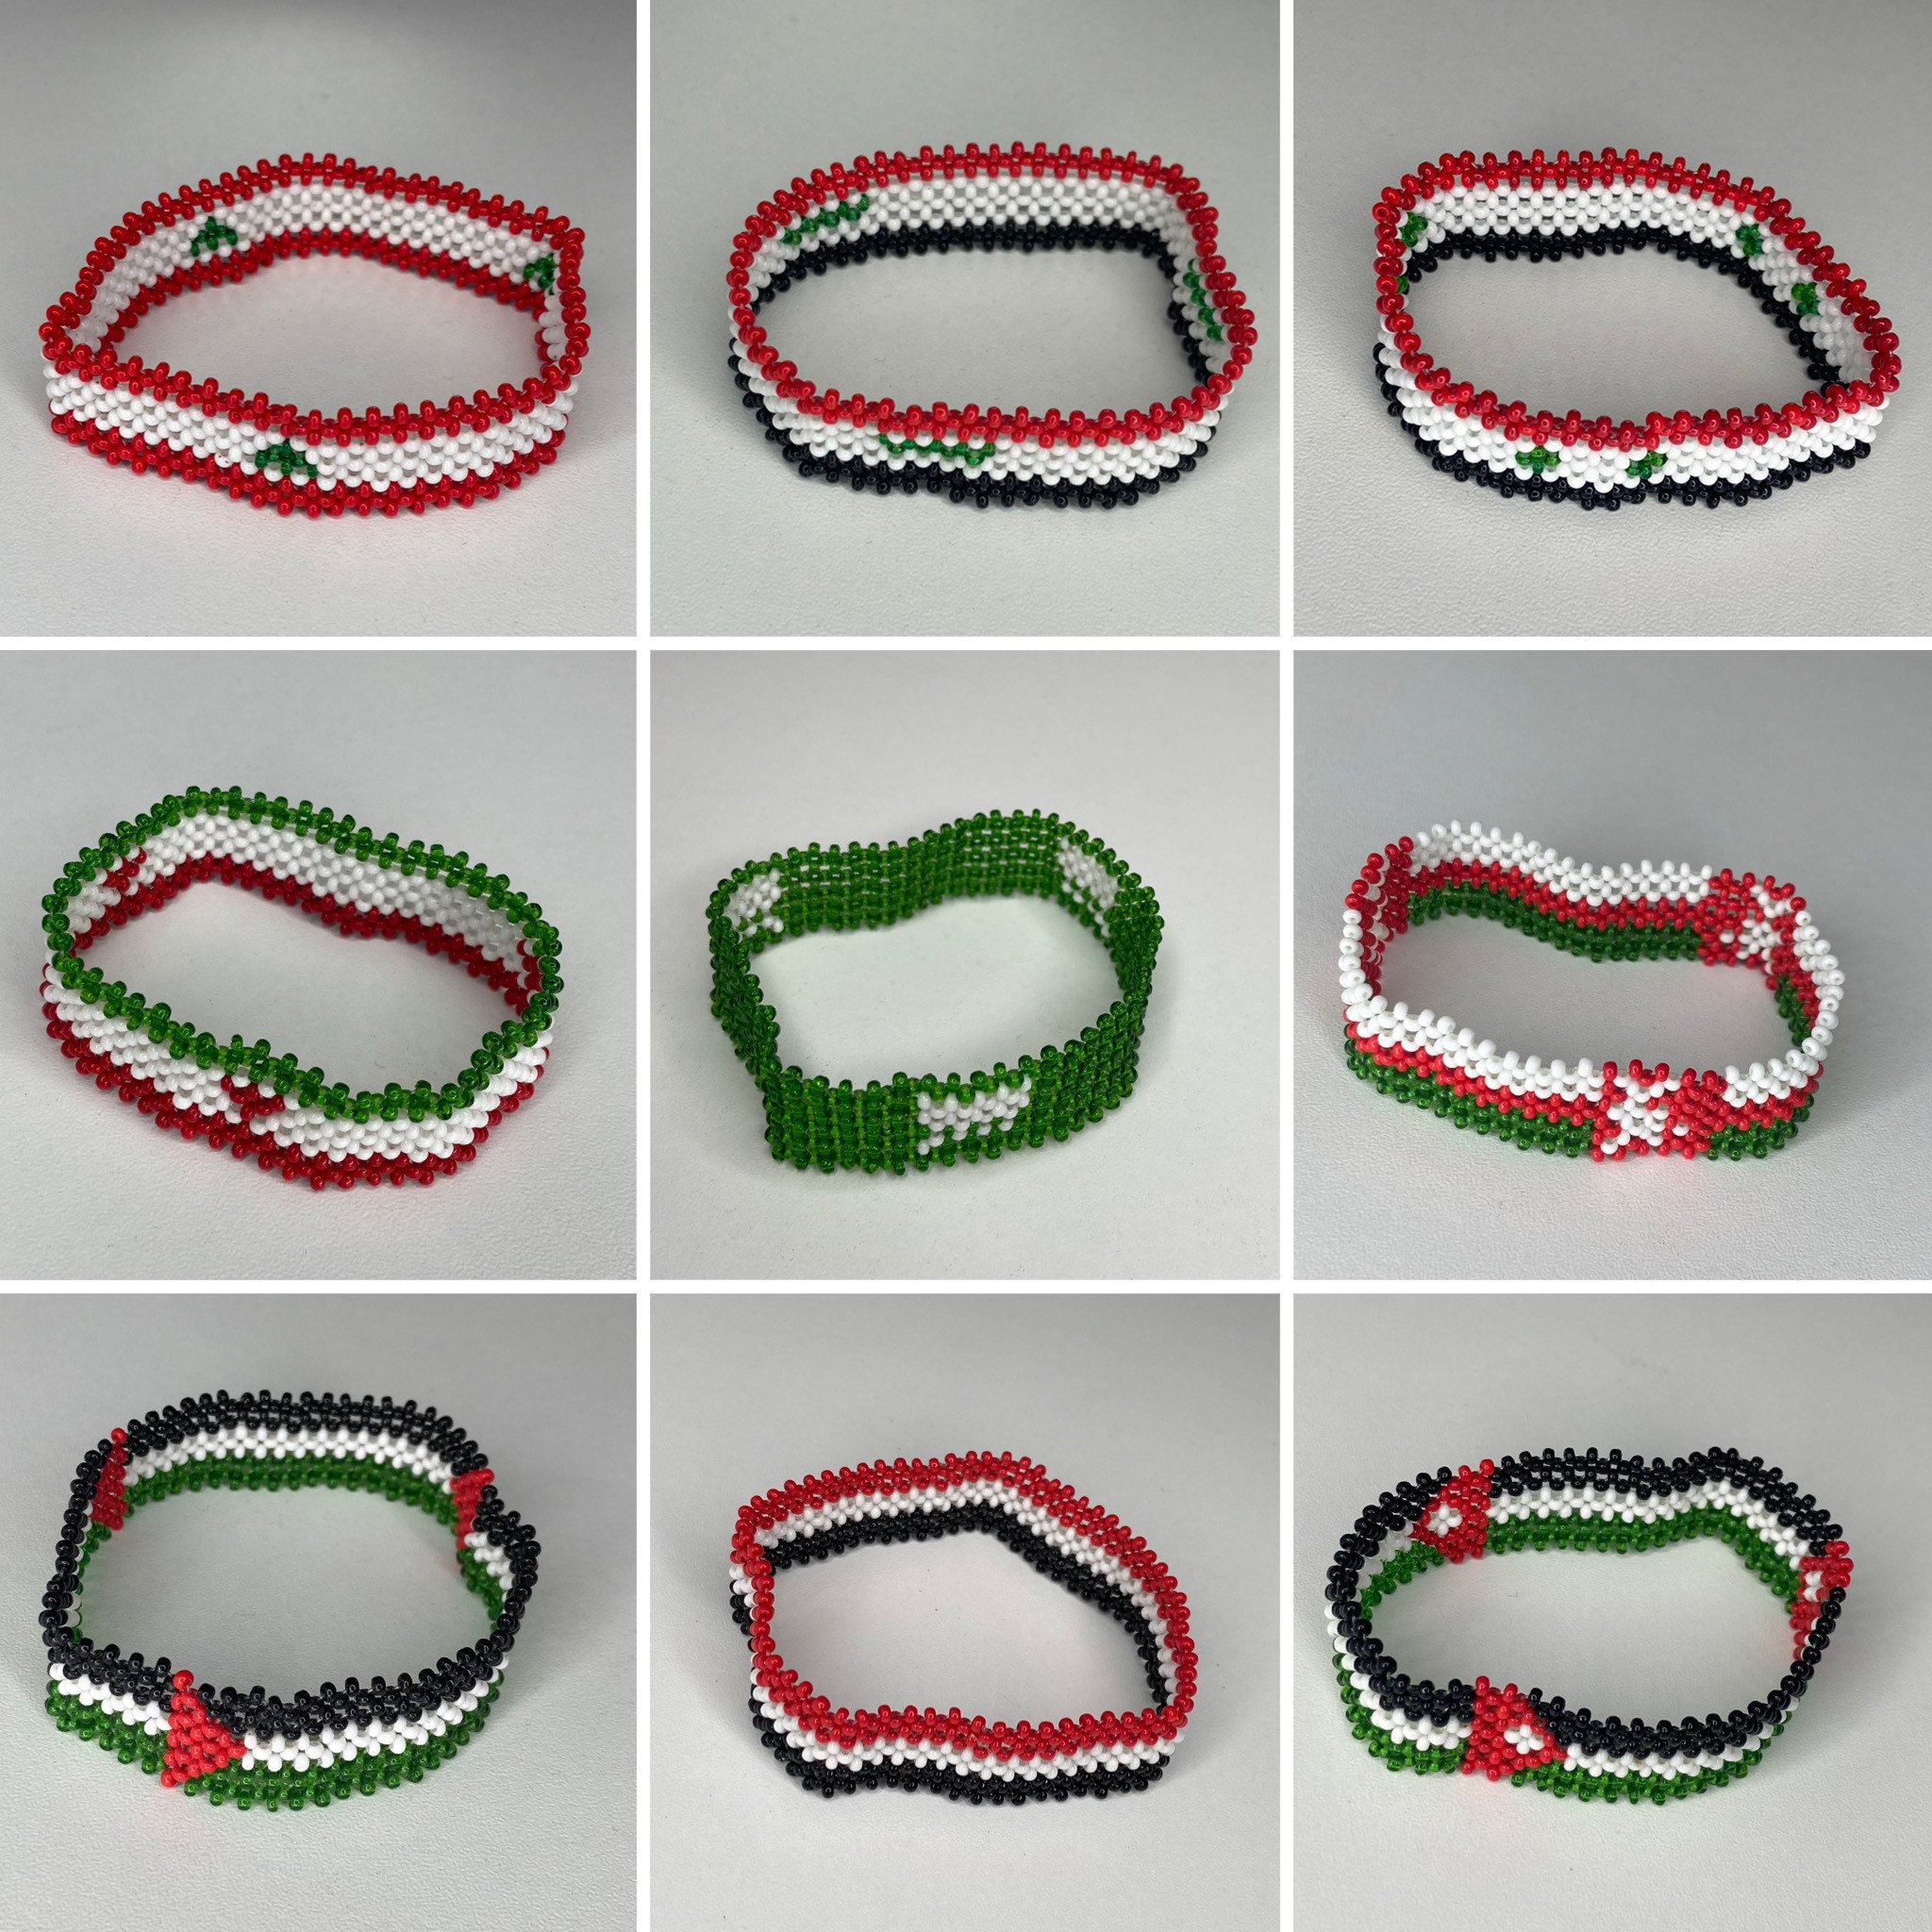 Lucky Red String Handmade Ceramic Bracelets -2/pc Set 19- 21cm(7.48-8.27)